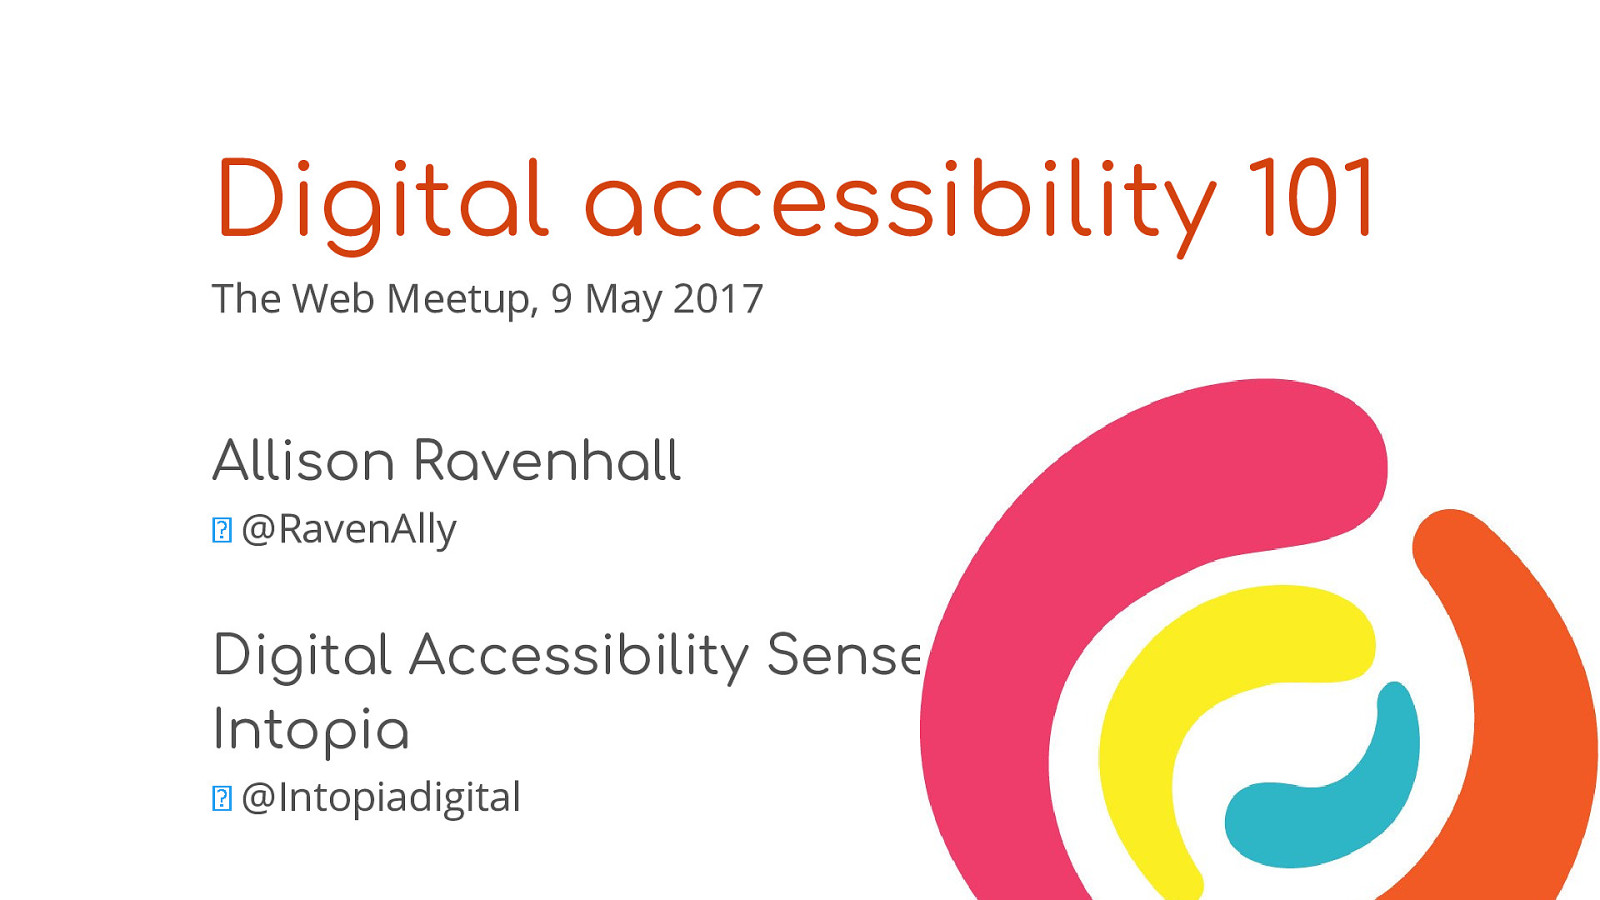 Digital accessibility 101